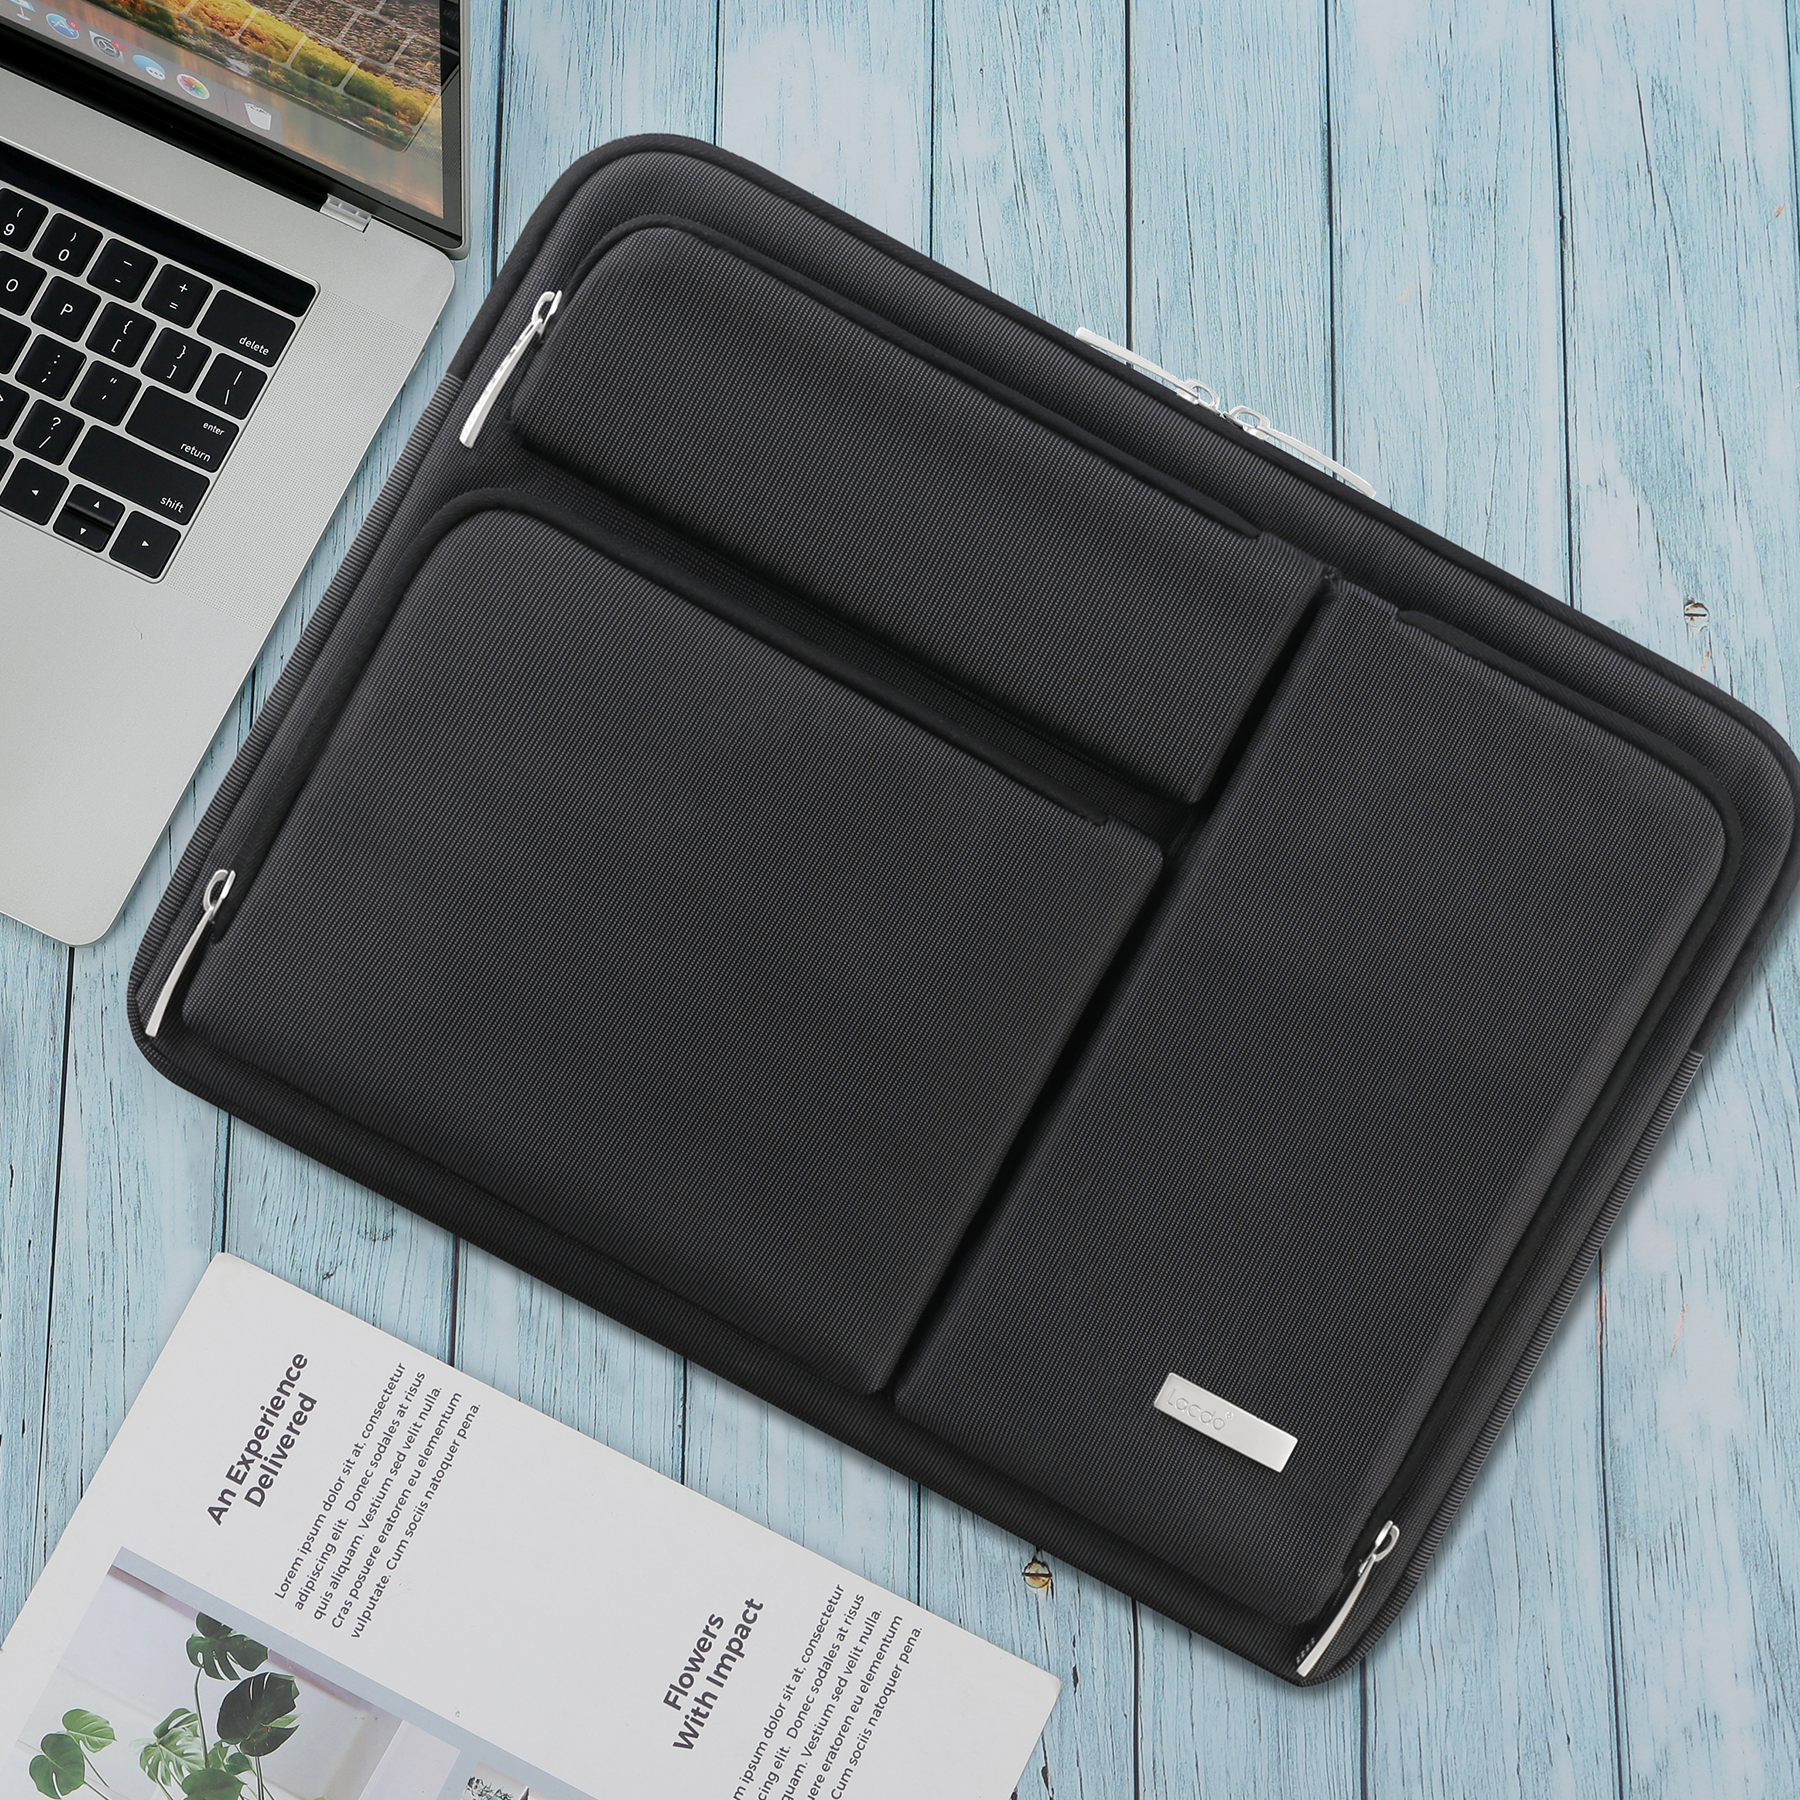 V Voova Laptop Case 14 15 15.6 inch Laptop Messenger Bag Protective Chromebook Bag with Shoulder Strap Compatible for 16 inch New MacBook Pro,Surface